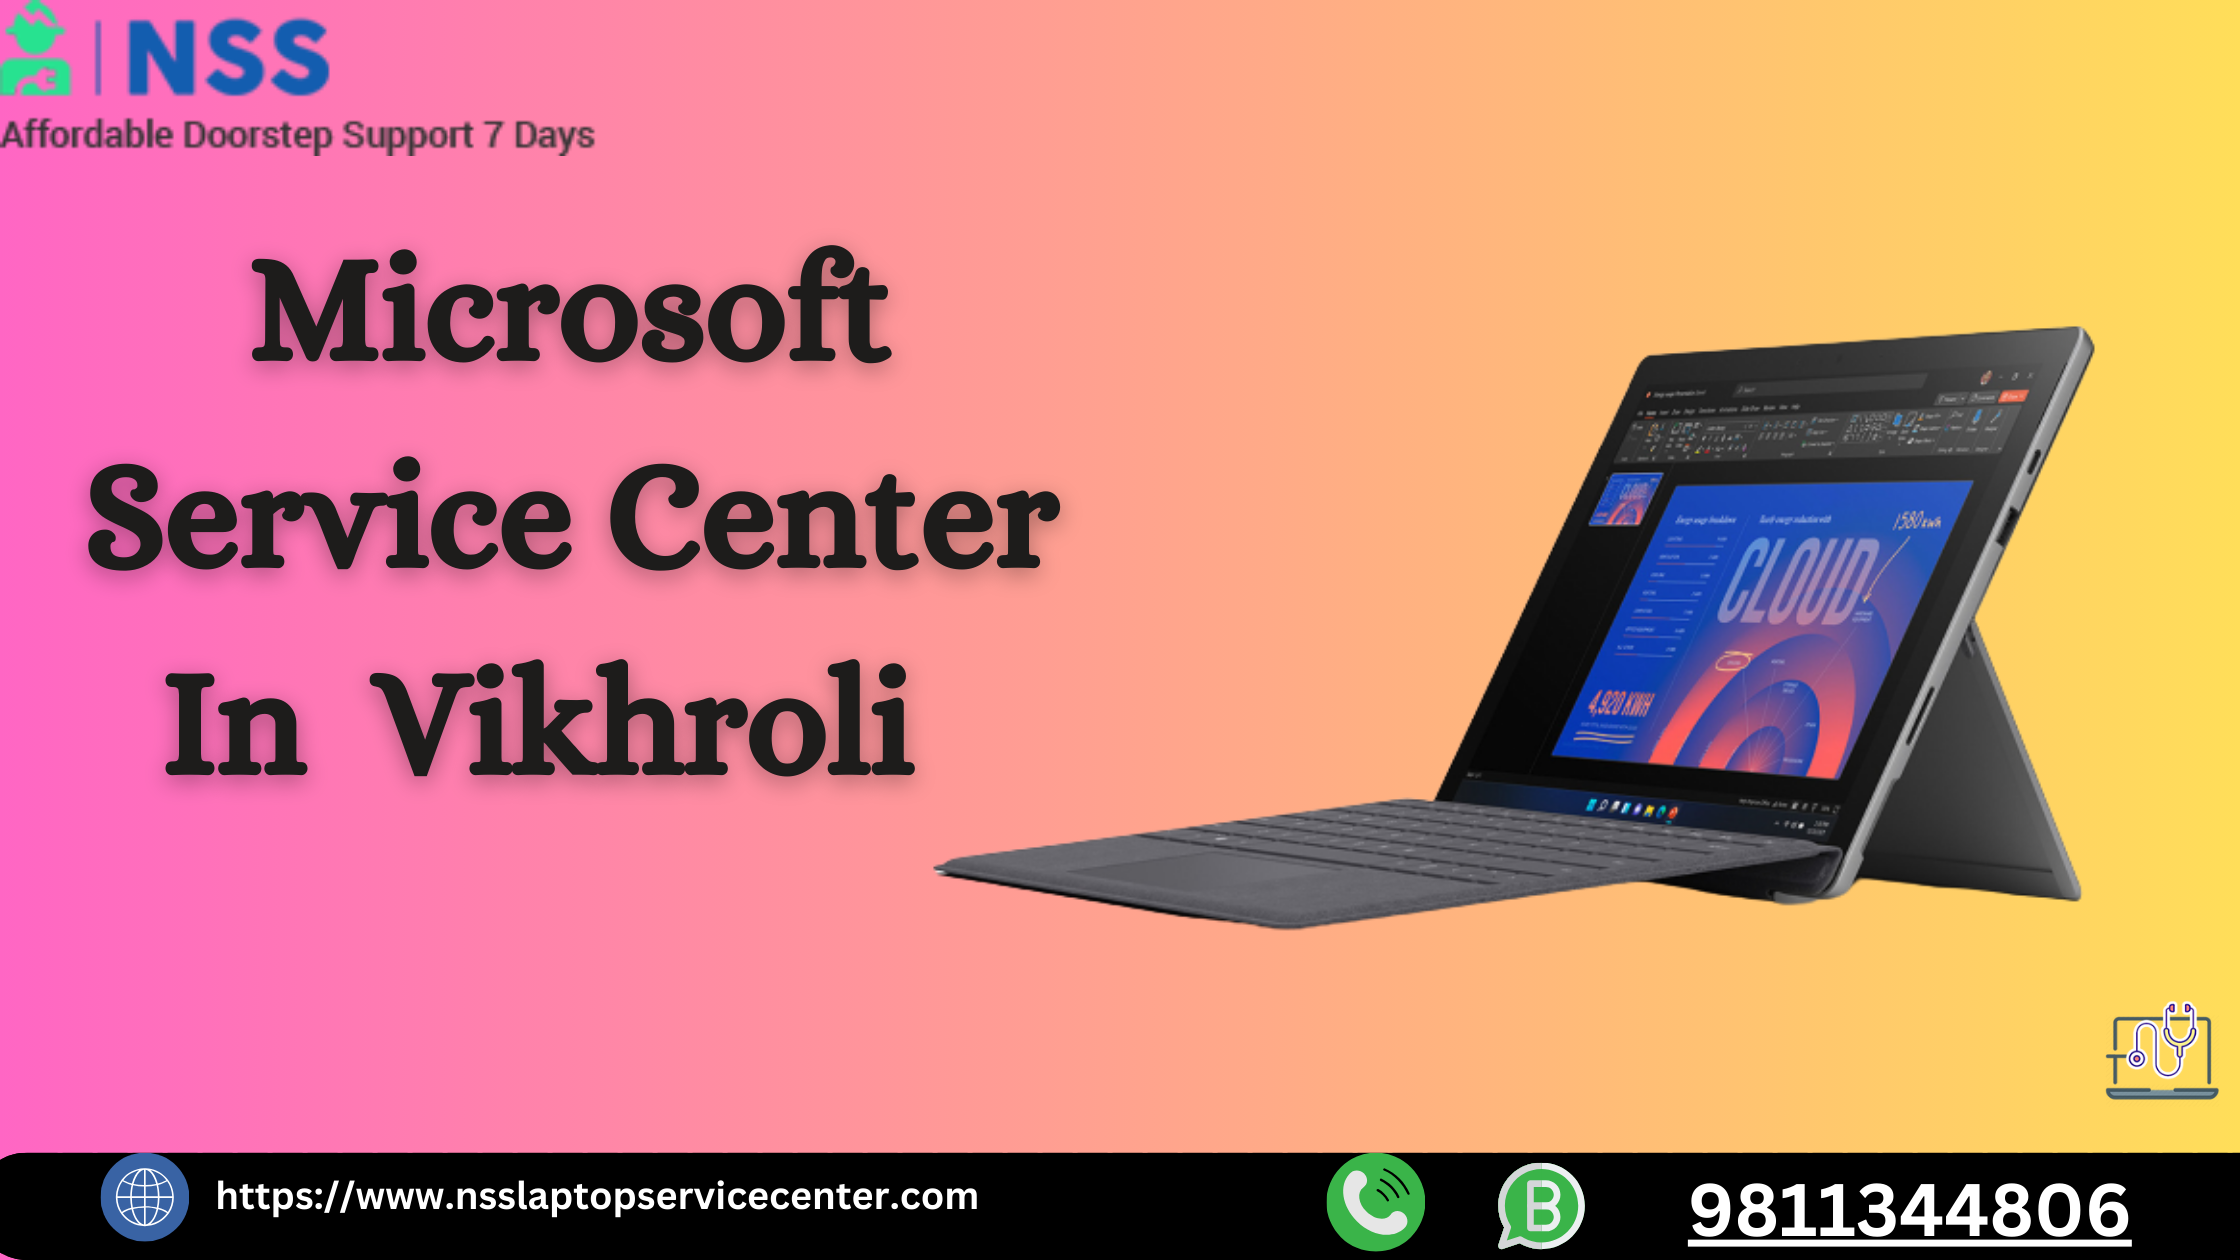 Microsoft Service Center in Vikhroli  Near Mumbai